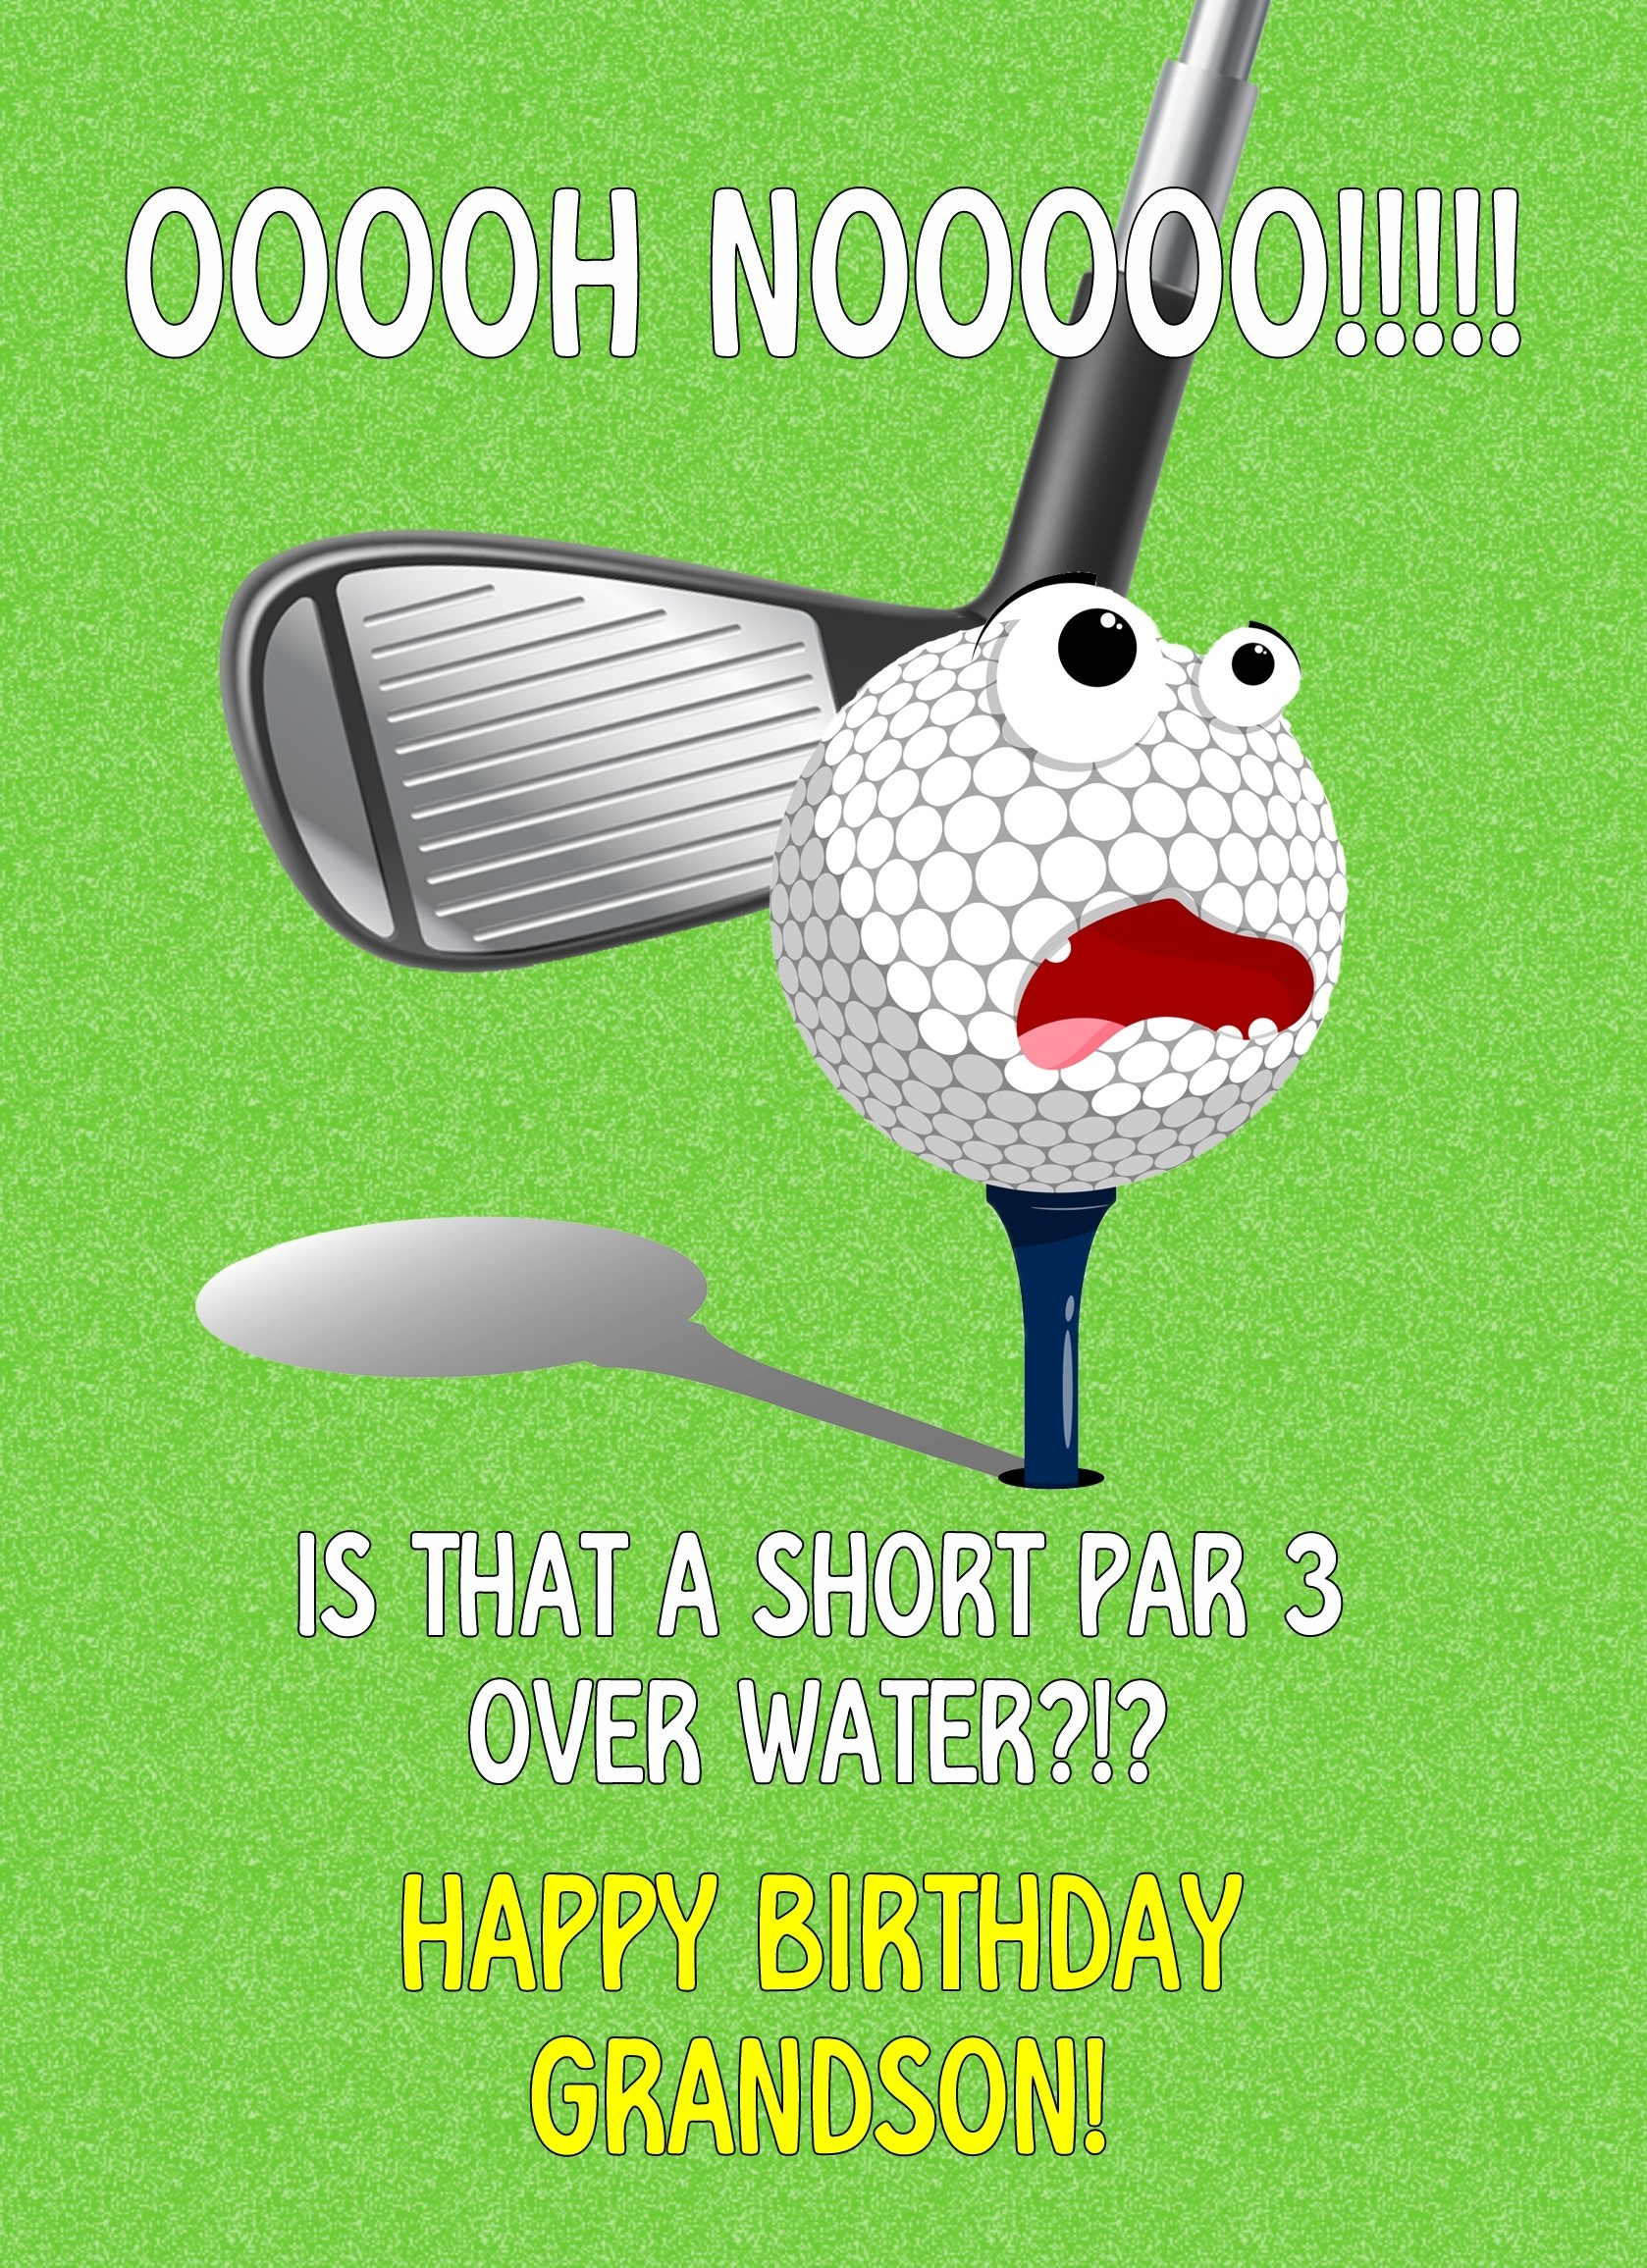 Funny Golf Birthday Card for Grandson